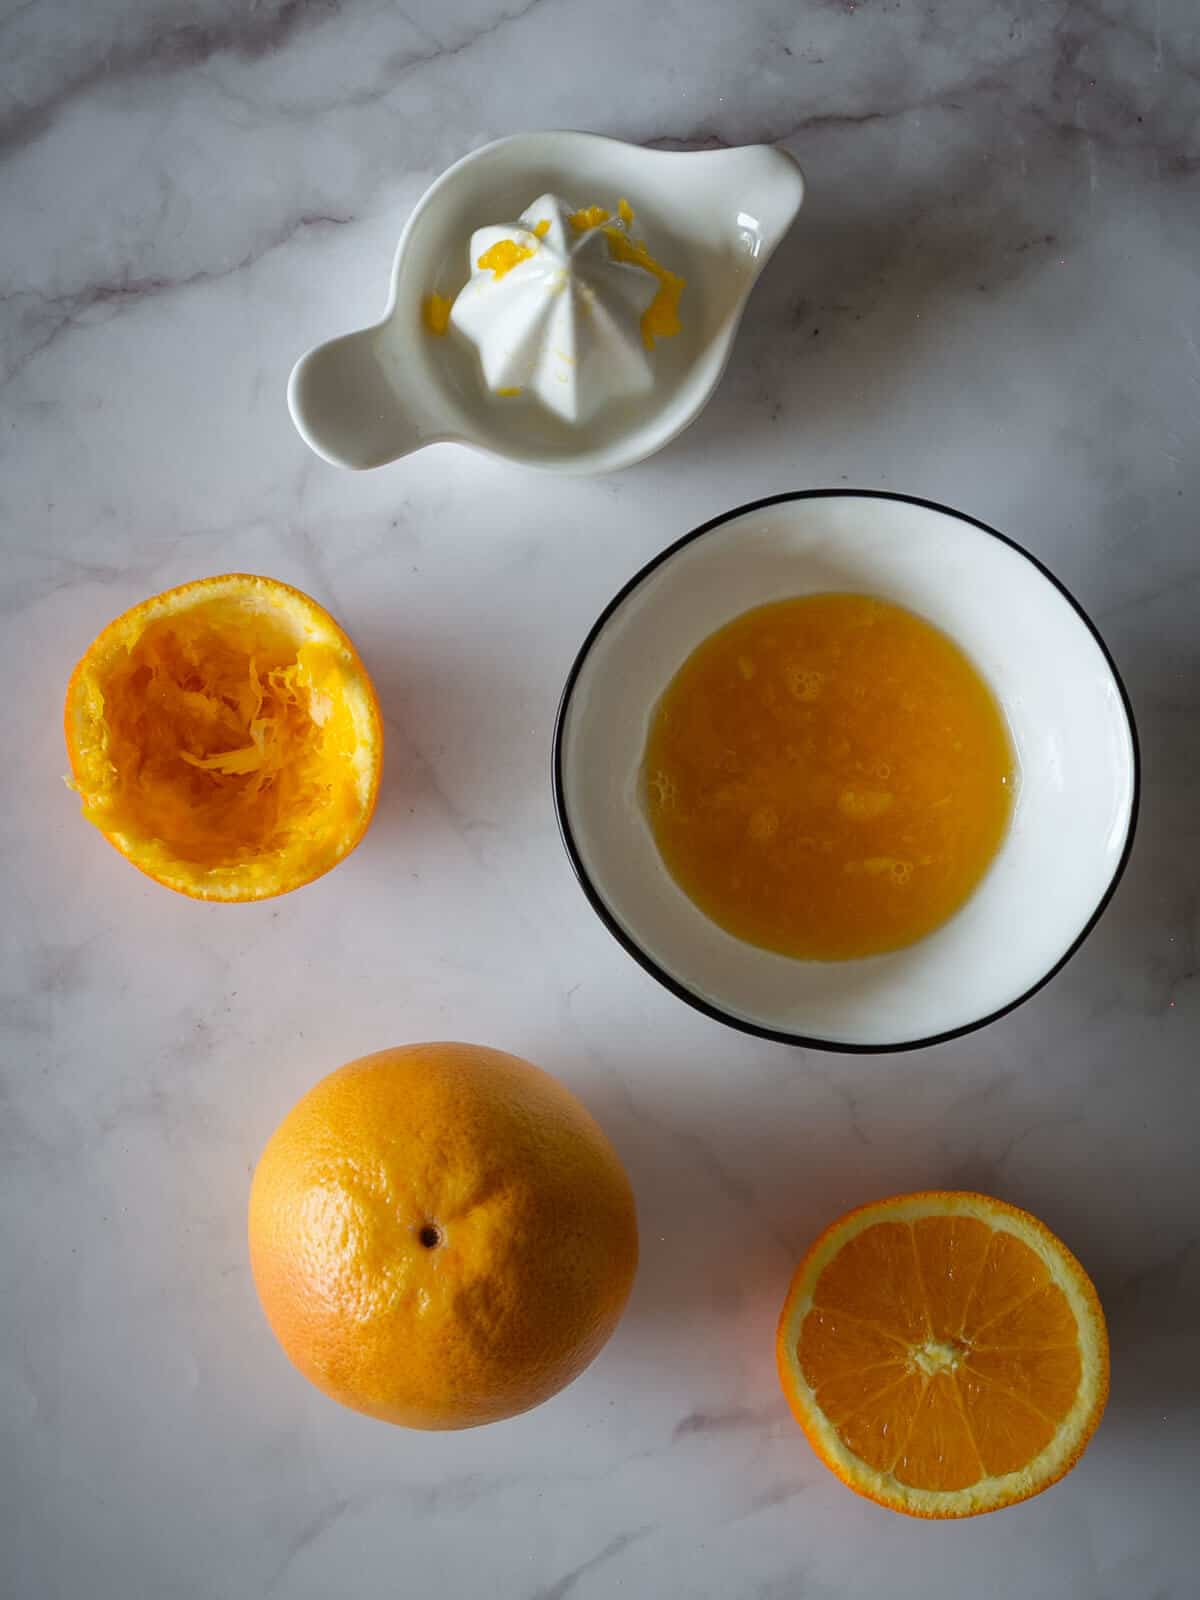 juiced orange using manual press